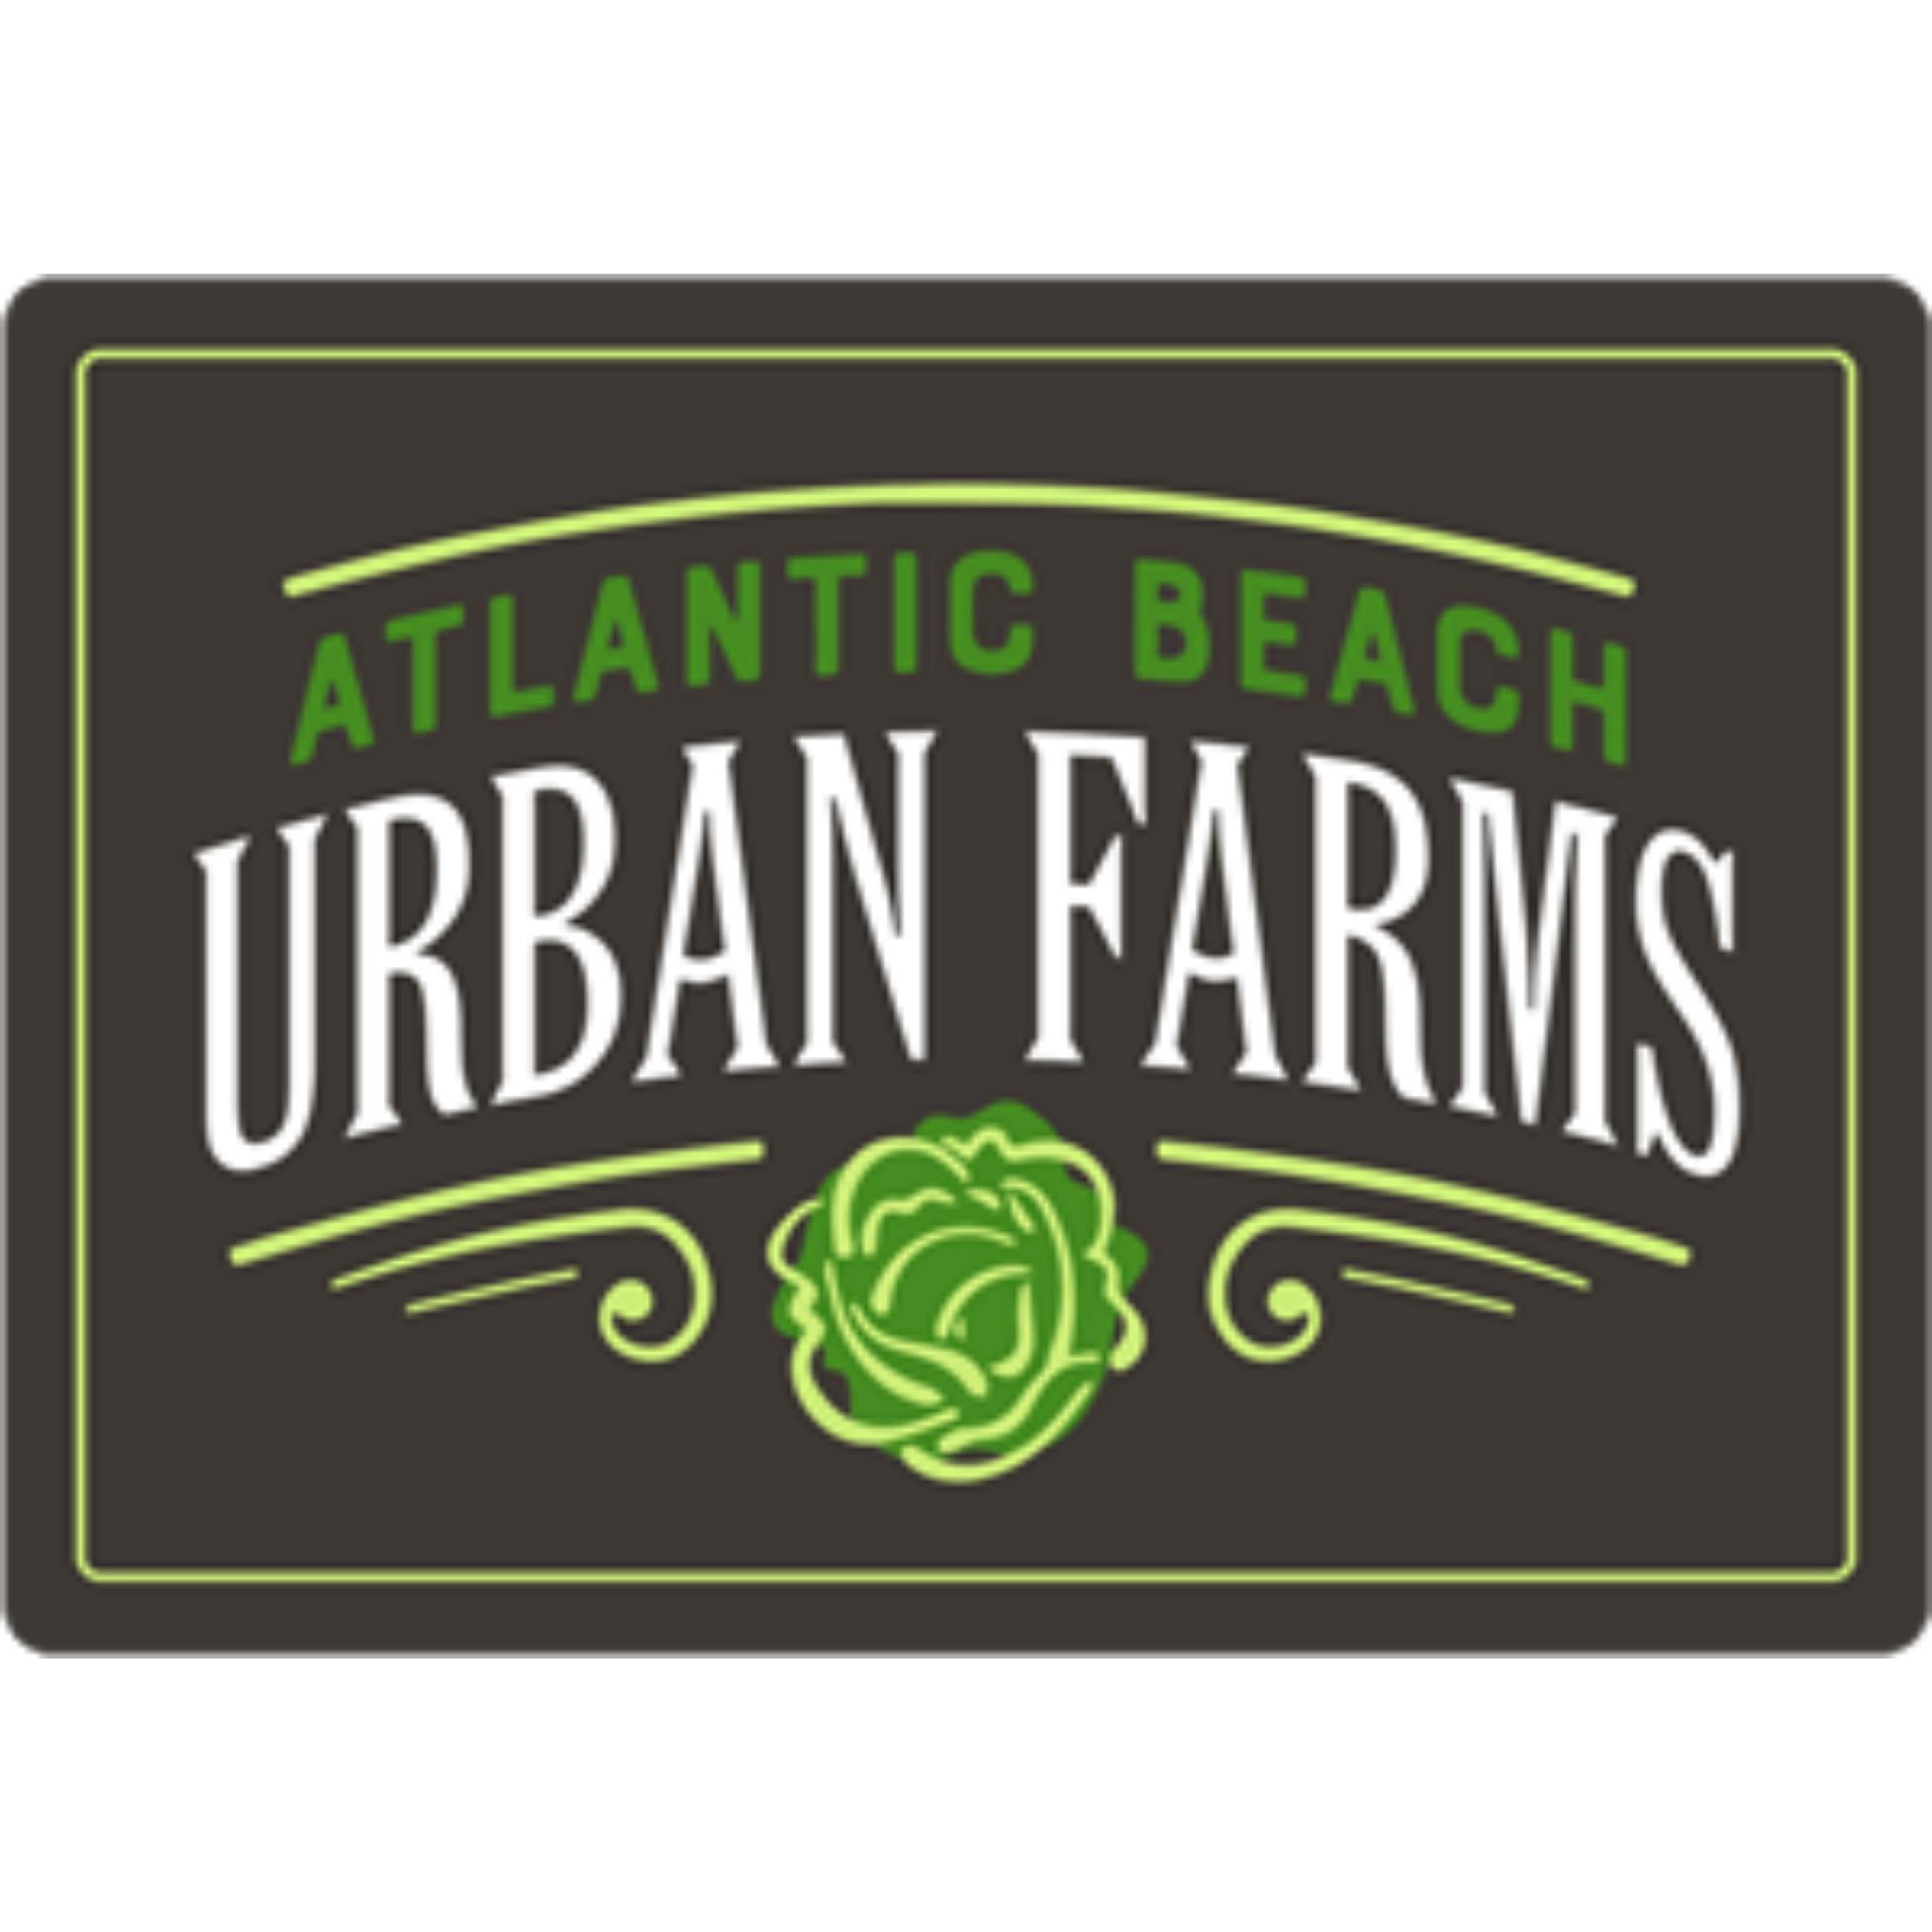 www.atlanticbeachurbanfarms.com